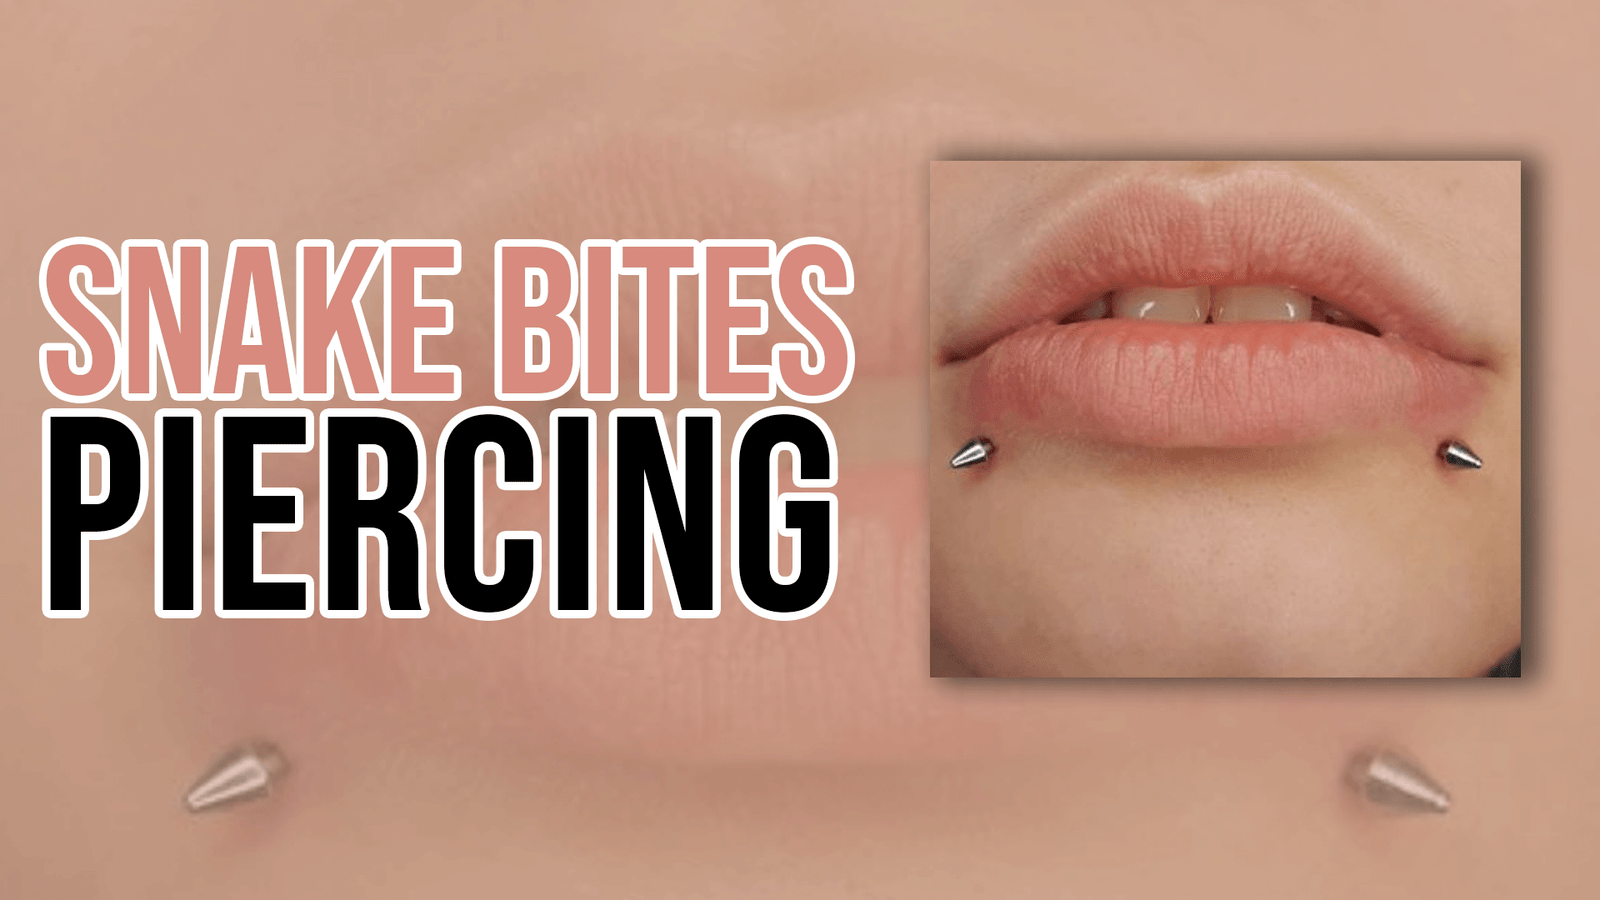 snake bites piercing